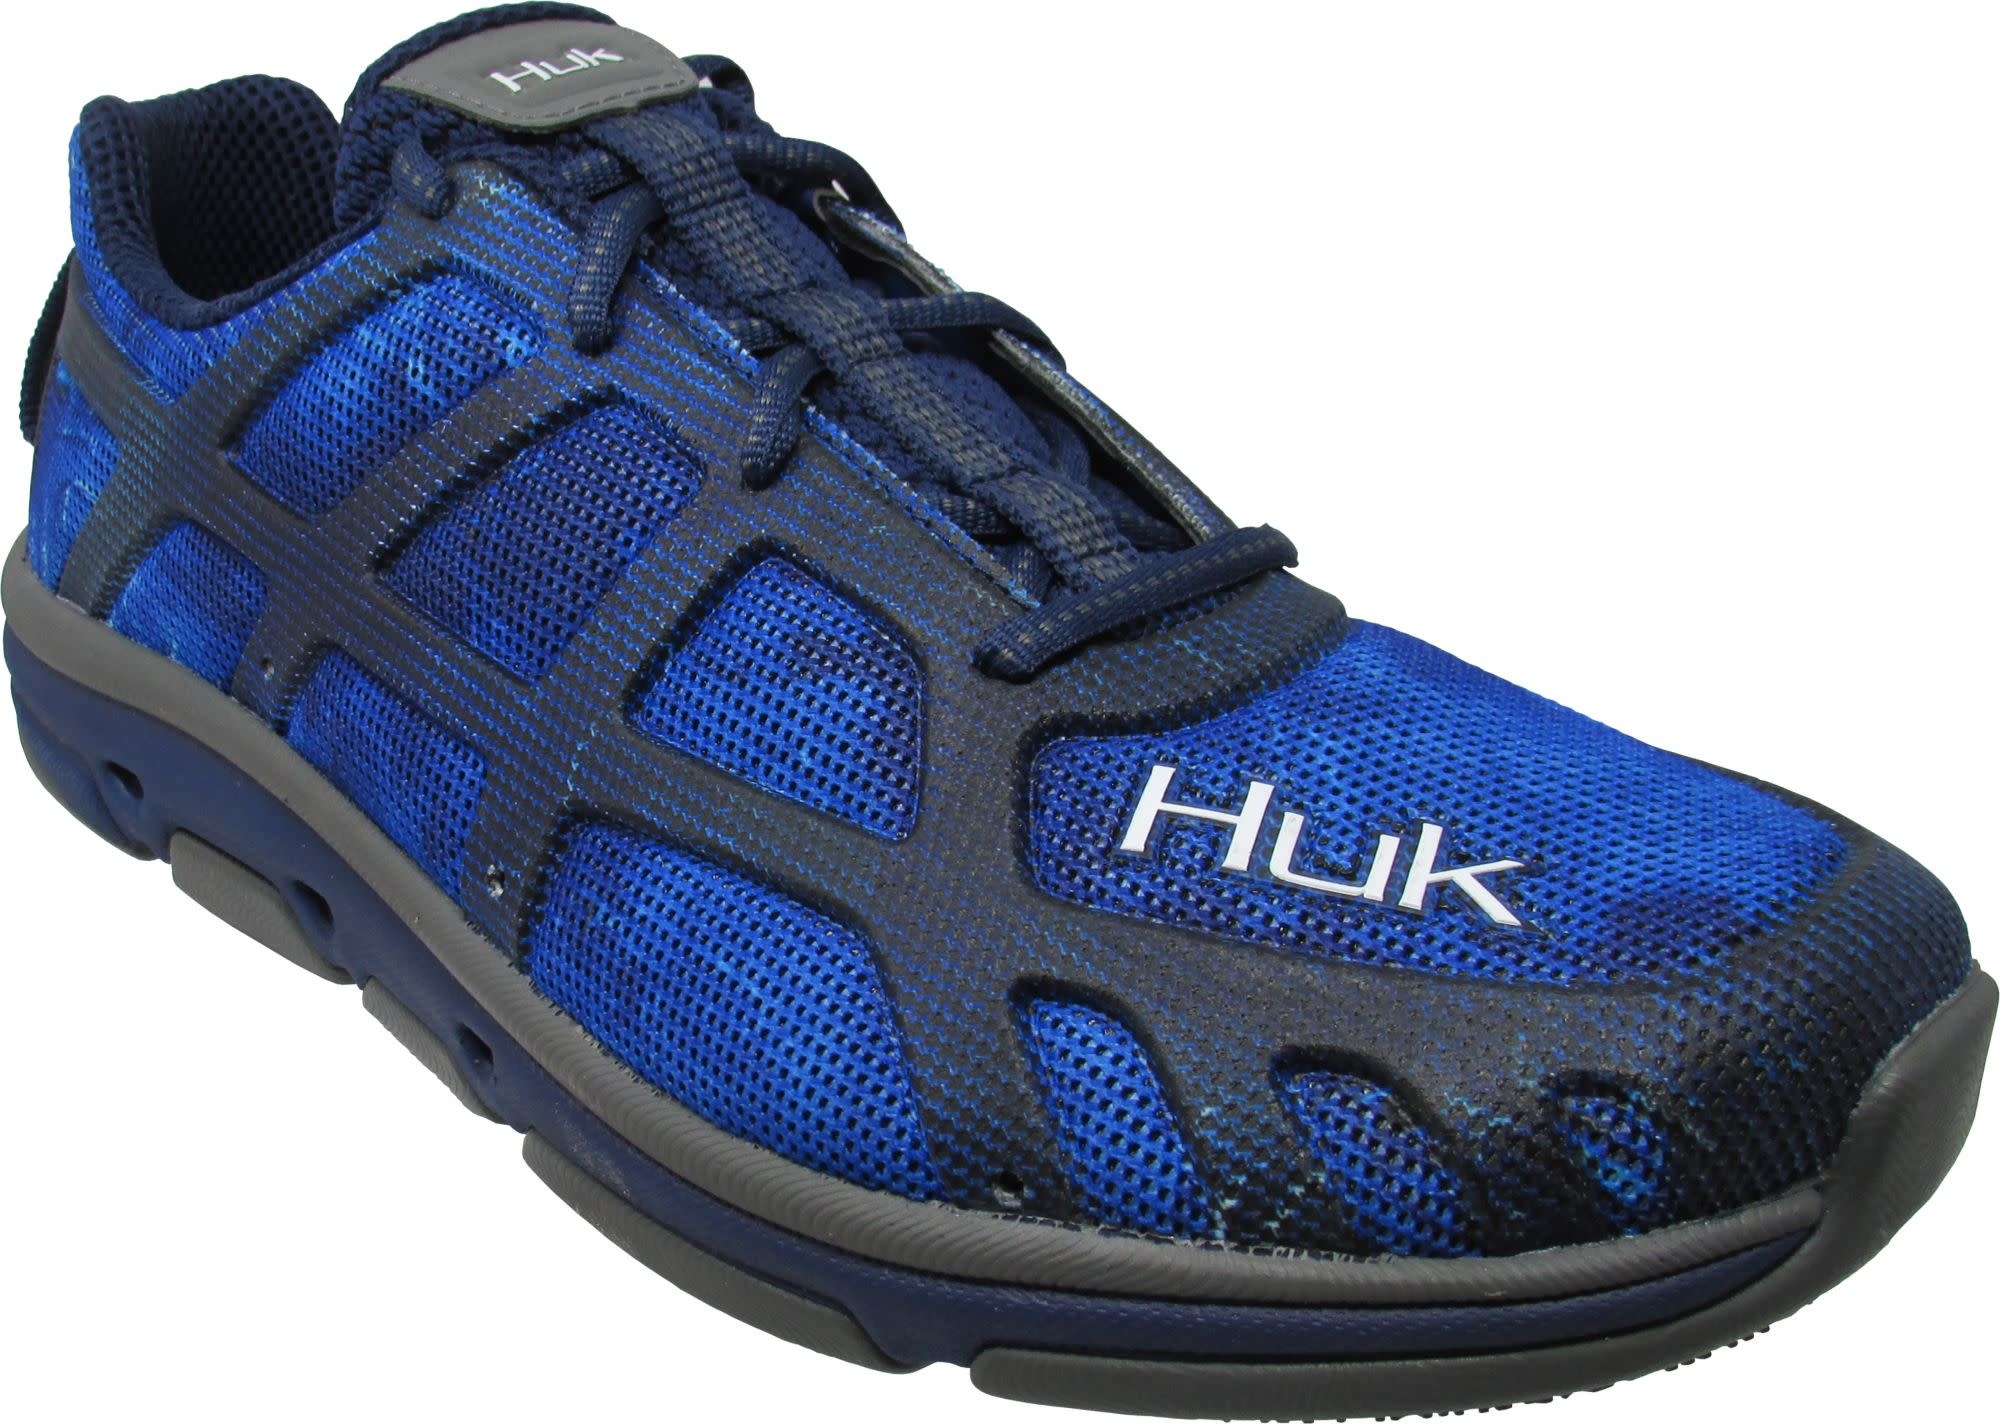 HUK 'ATTACK' PERFORMANCE Fishing Shoes Men's Sz. 9.5 $34.95 - PicClick